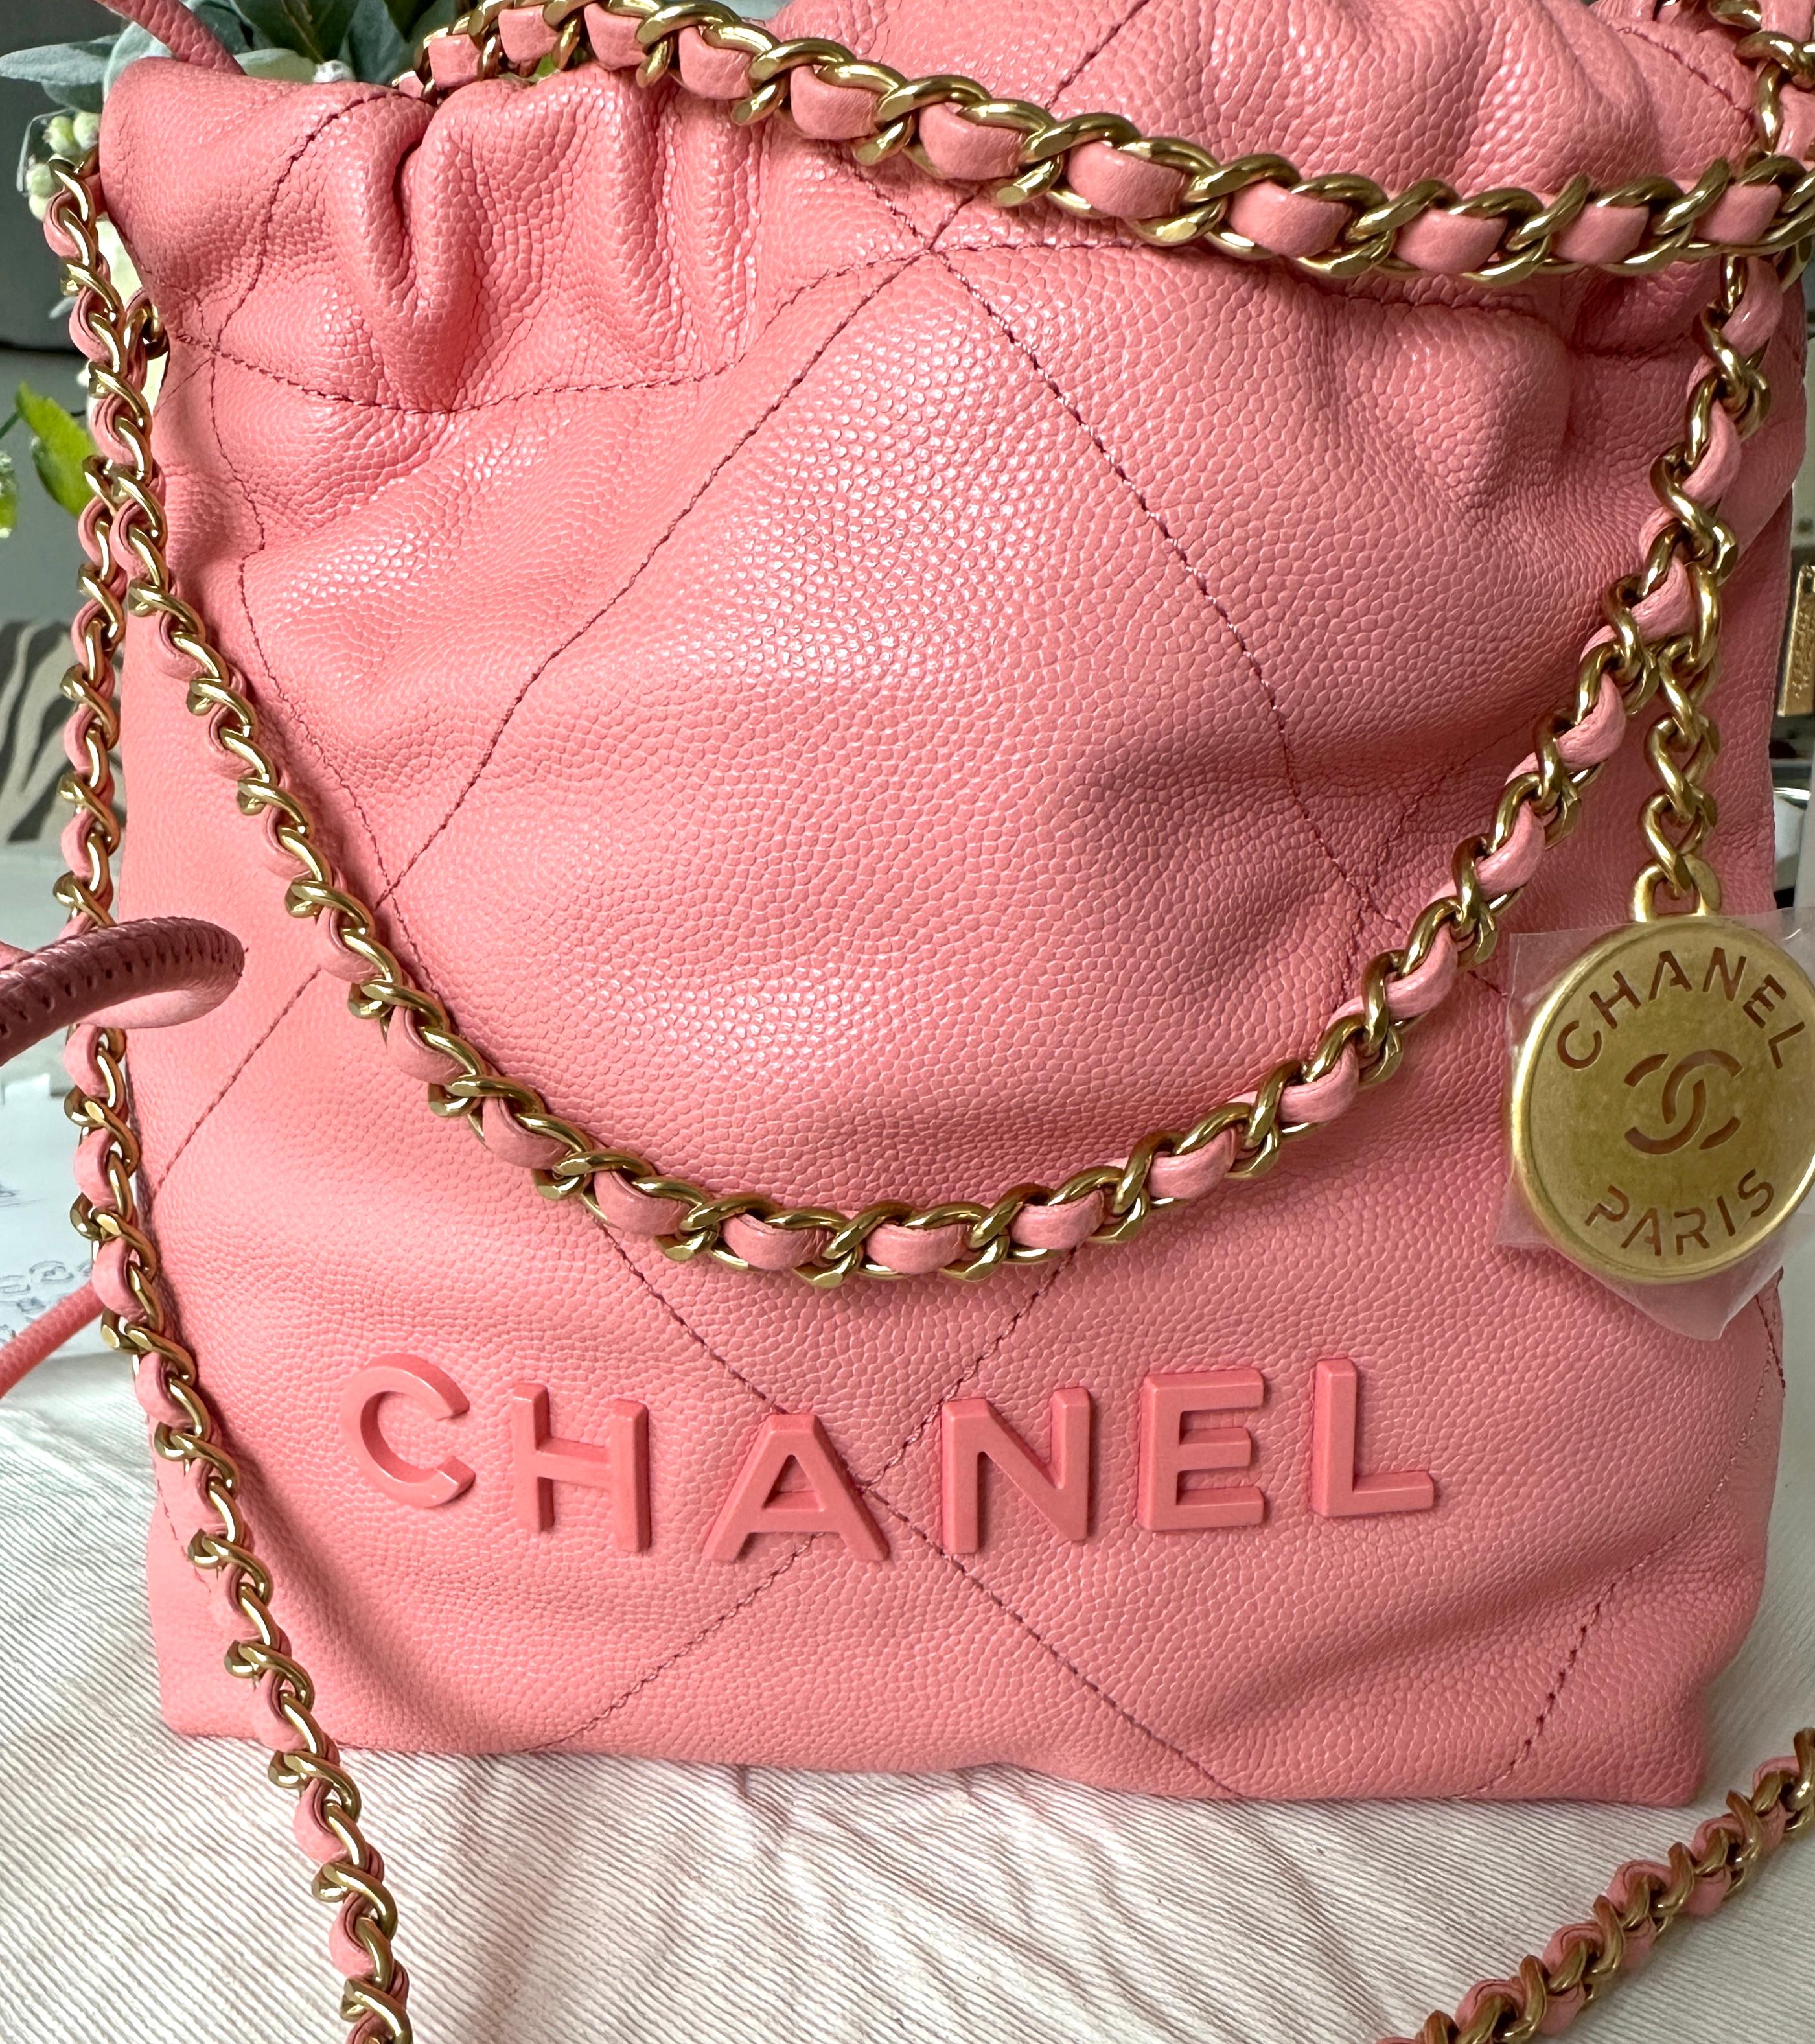 CHANEL 22 Mini Handbag Pink Coral Goldtone NEW 7